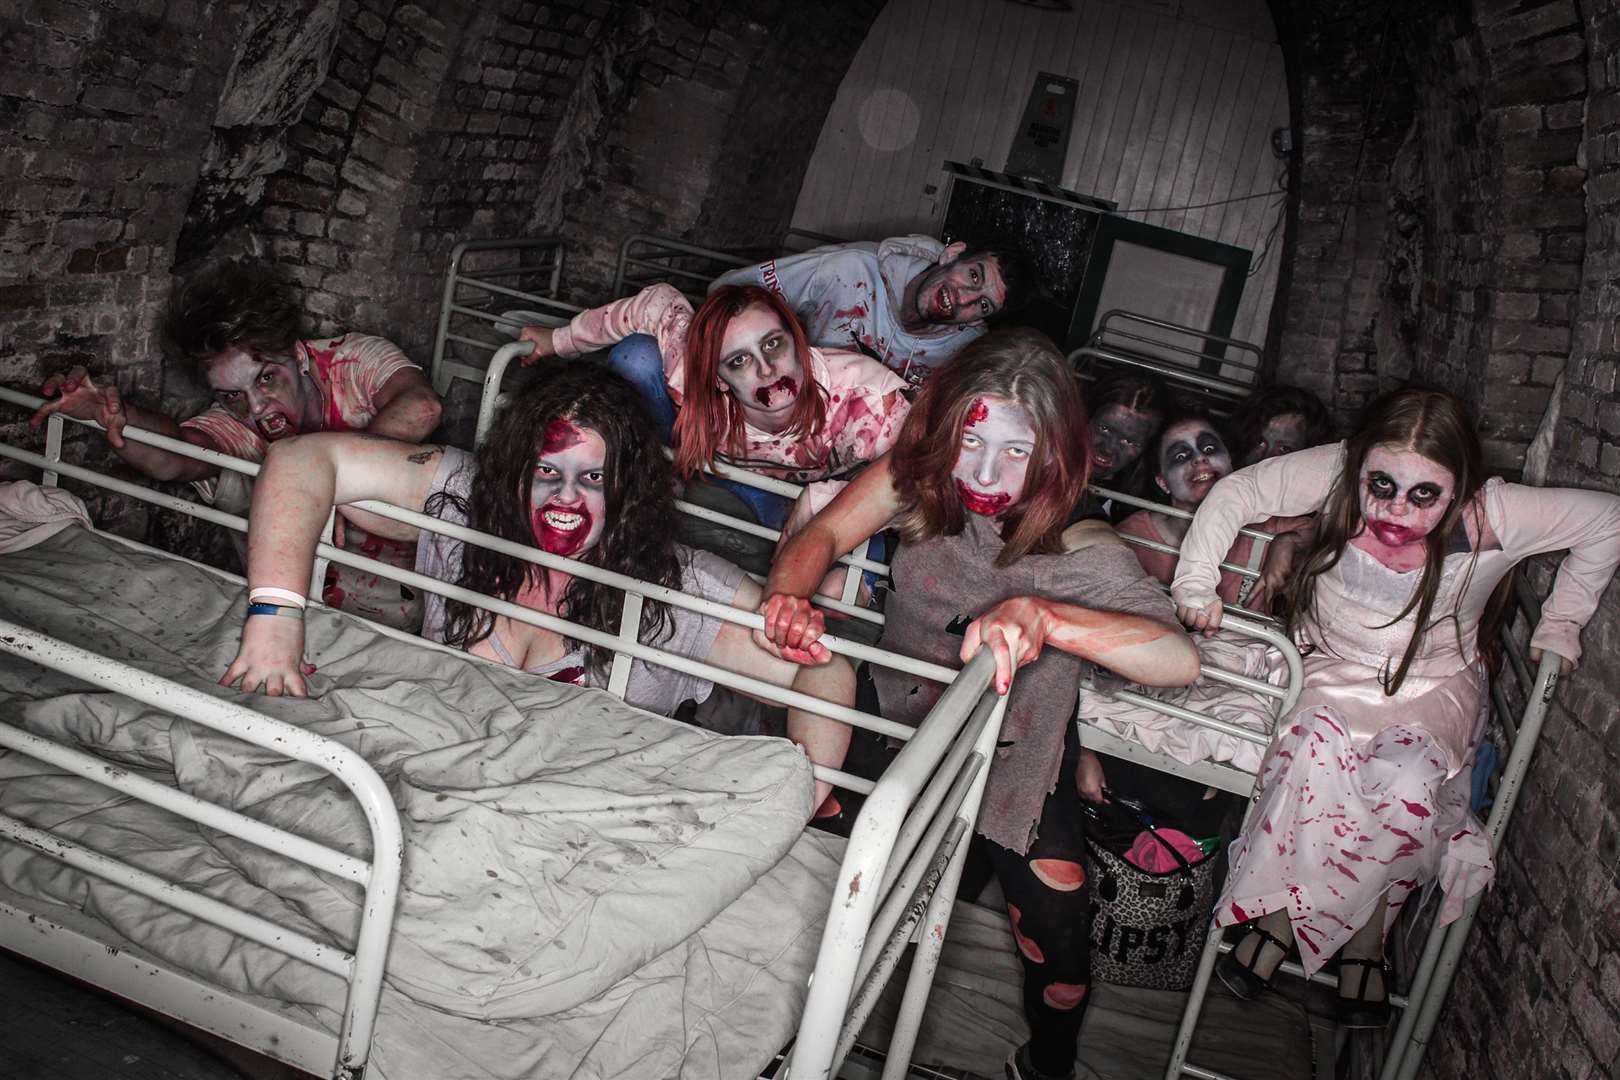 Fort Amherst Halloween Horrors